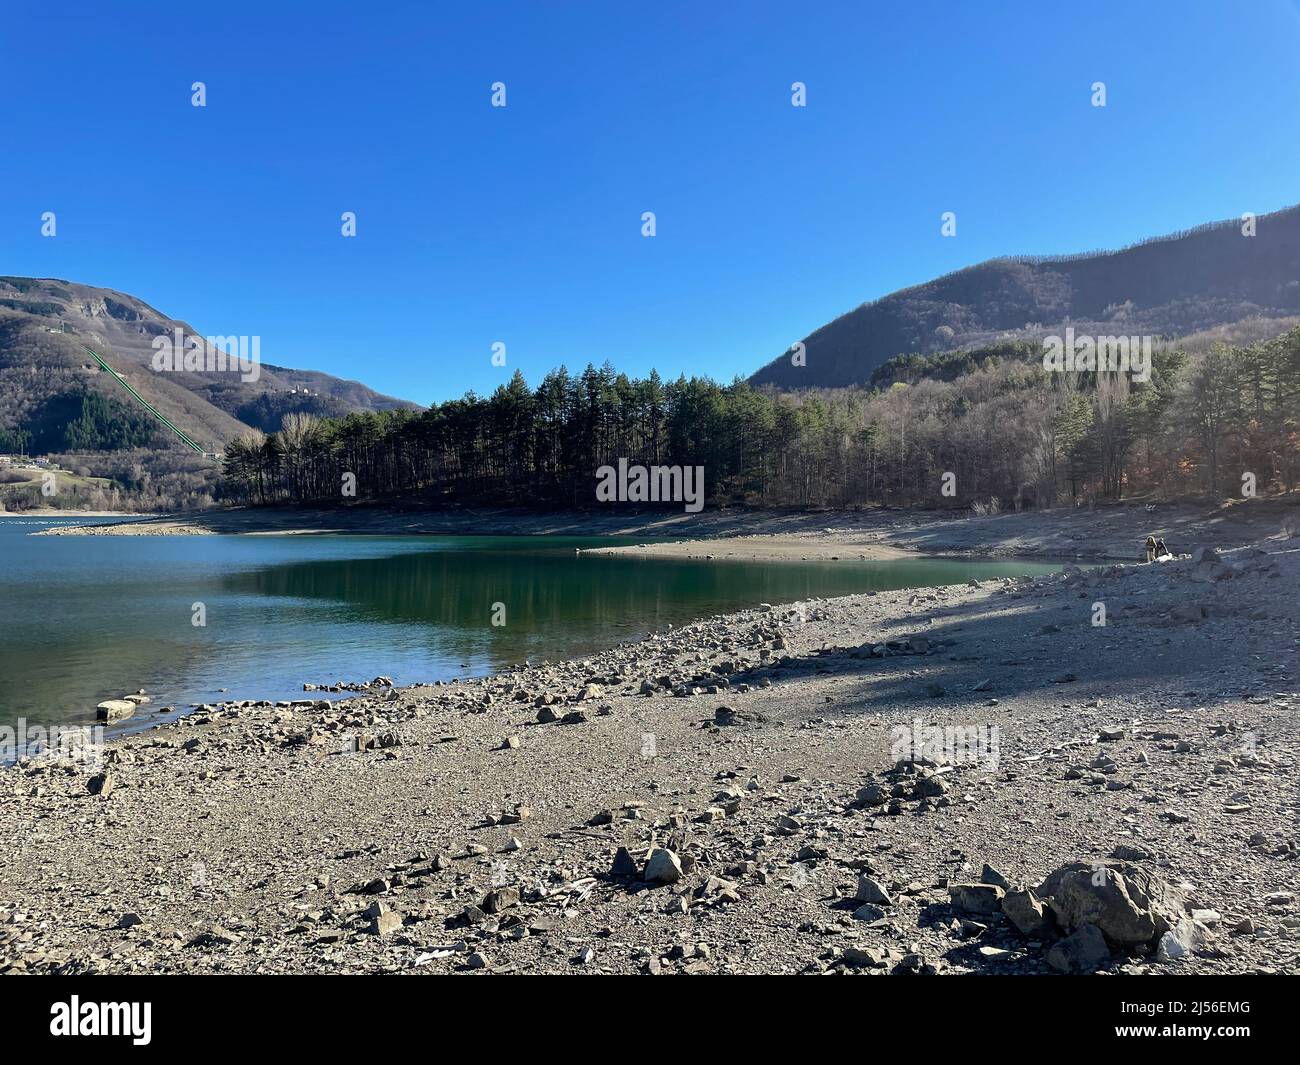 Lago di Suviana, Provincia de Bolonia (Emilia-Romagna), Italia. Lago artificial visto desde la orilla. Bajos niveles de agua, gran parte del lecho rocoso está expuesto. Foto de stock